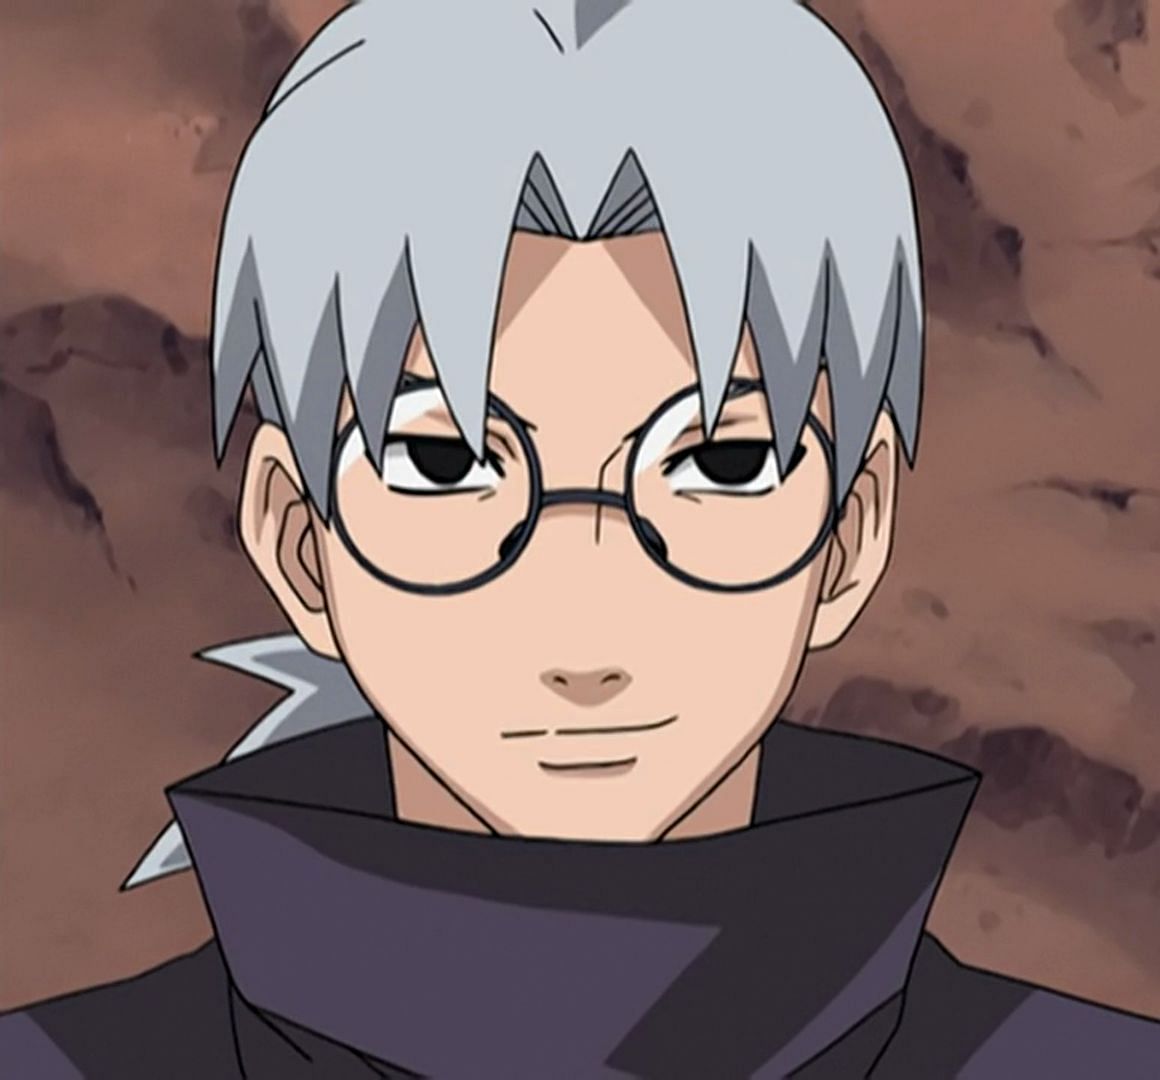 Kabuto from the Naruto series (Image via Pierrot)